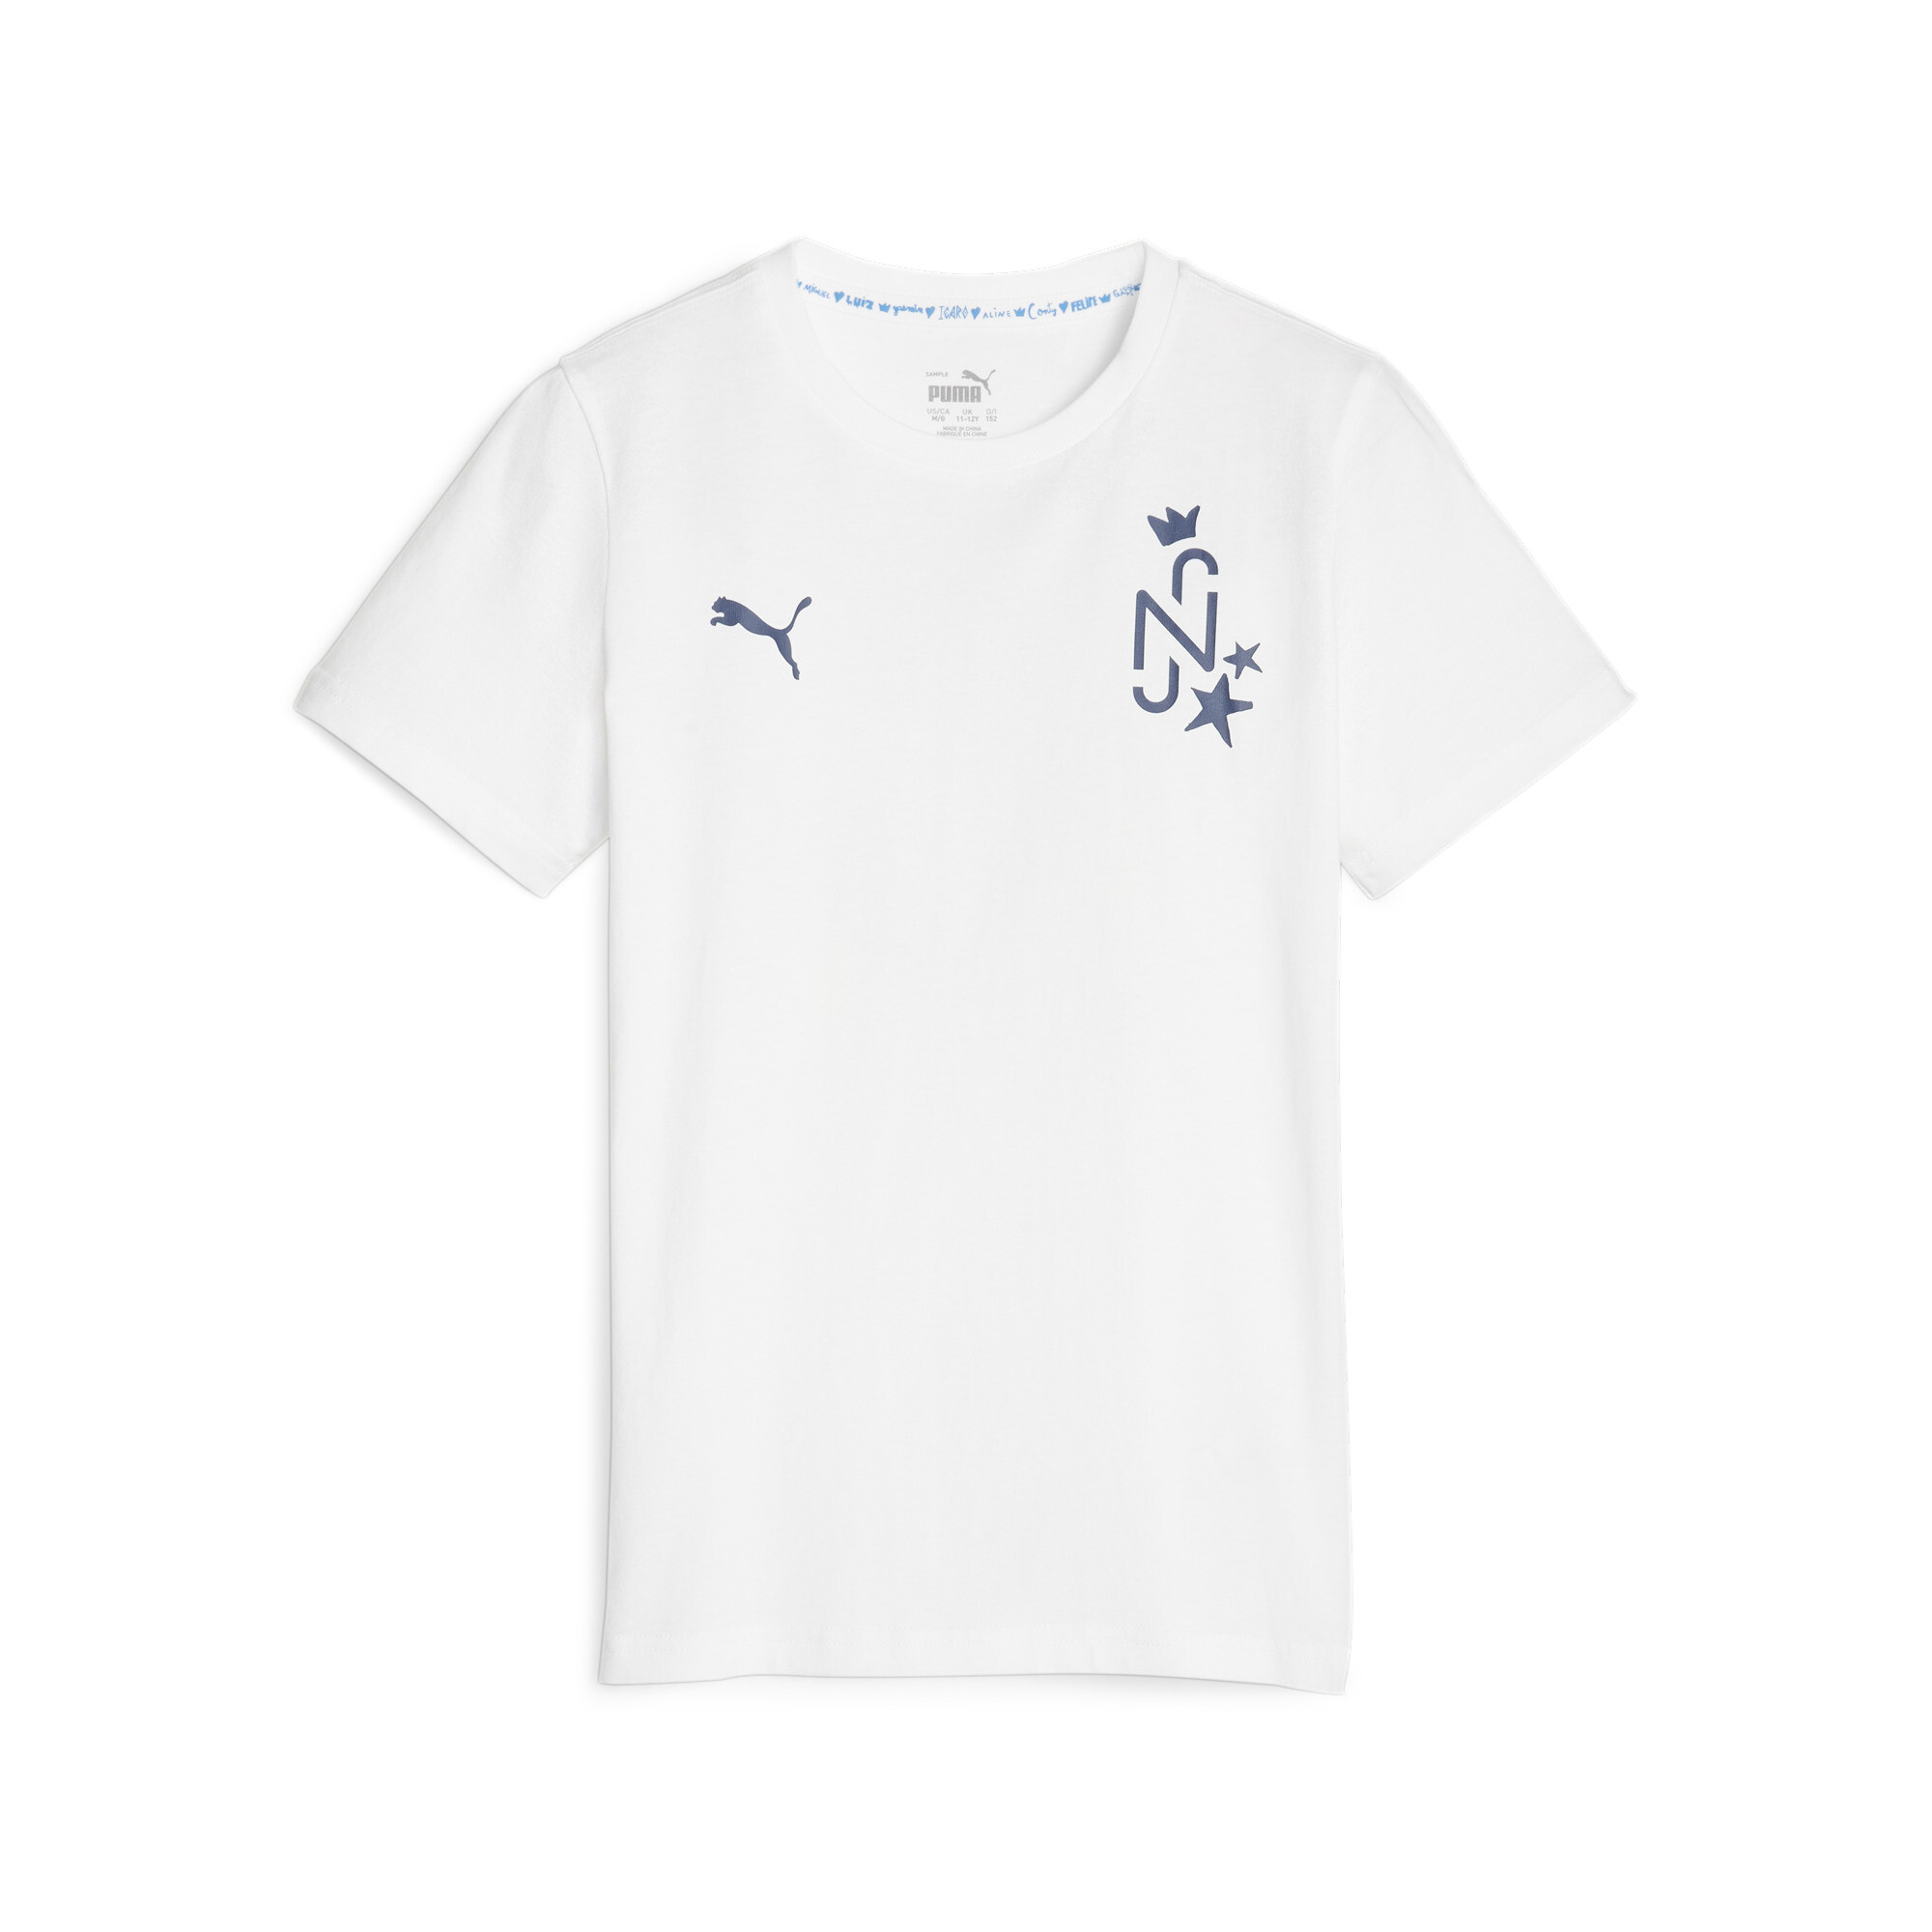 PUMA Neymar Jr Football T-Shirt In White, Size 13-14 Youth